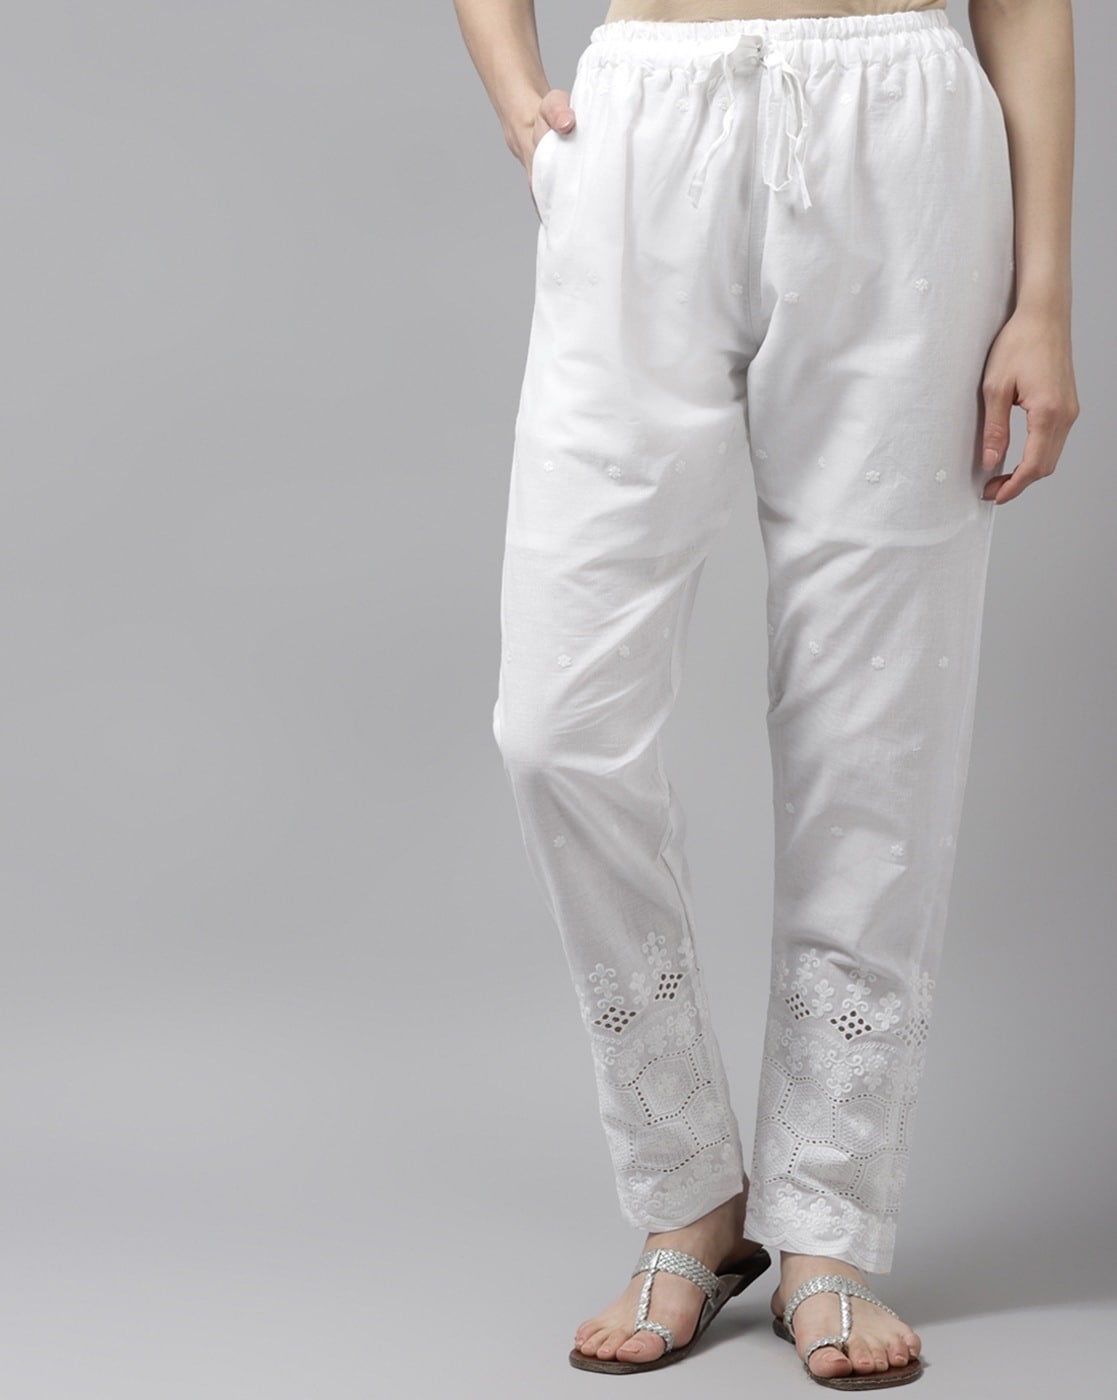 Buy AURELIA White Solid Cotton Blend Women's Casual Trousers | Shoppers Stop